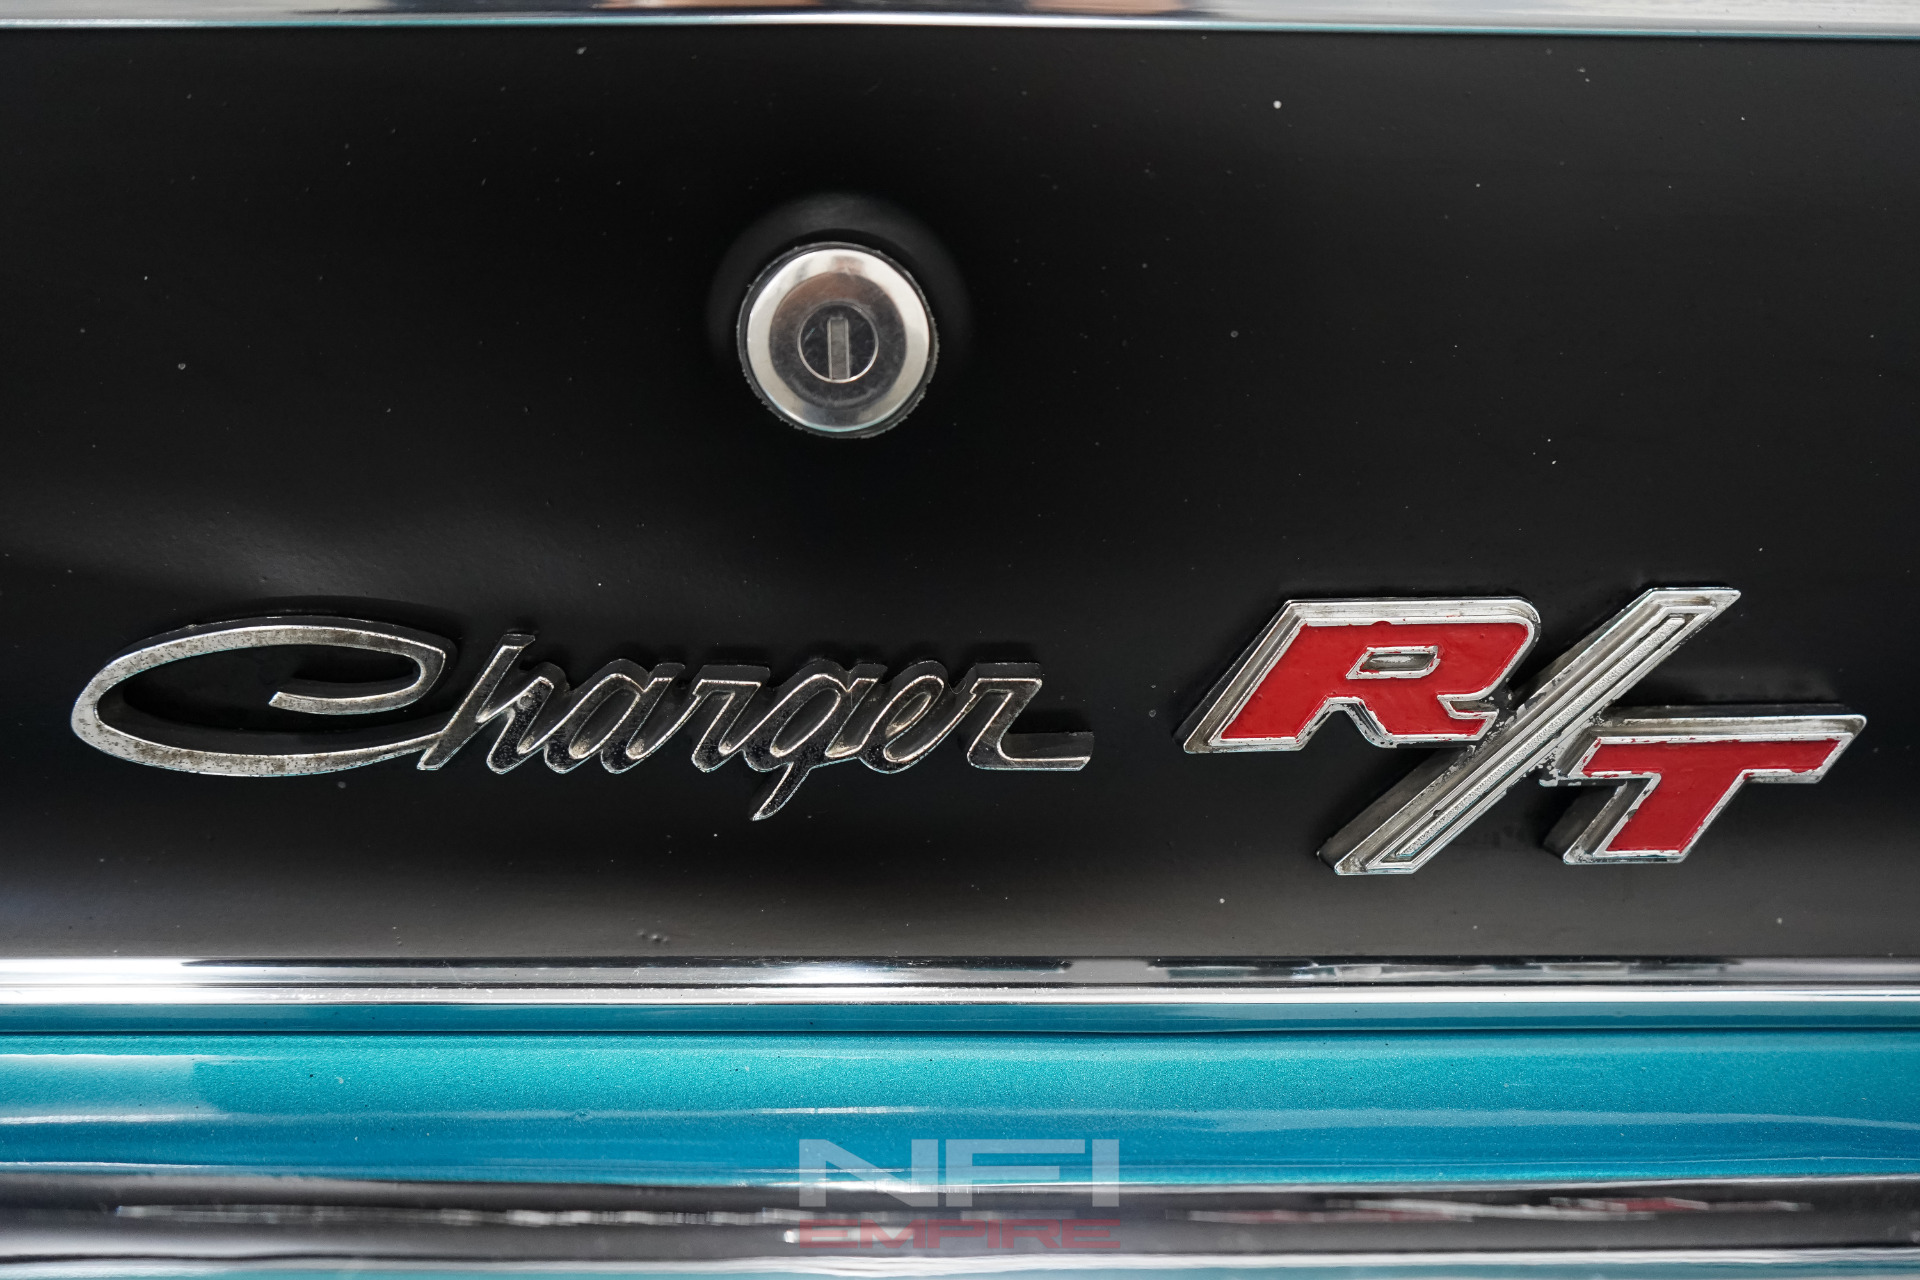 1969 dodge charger logo